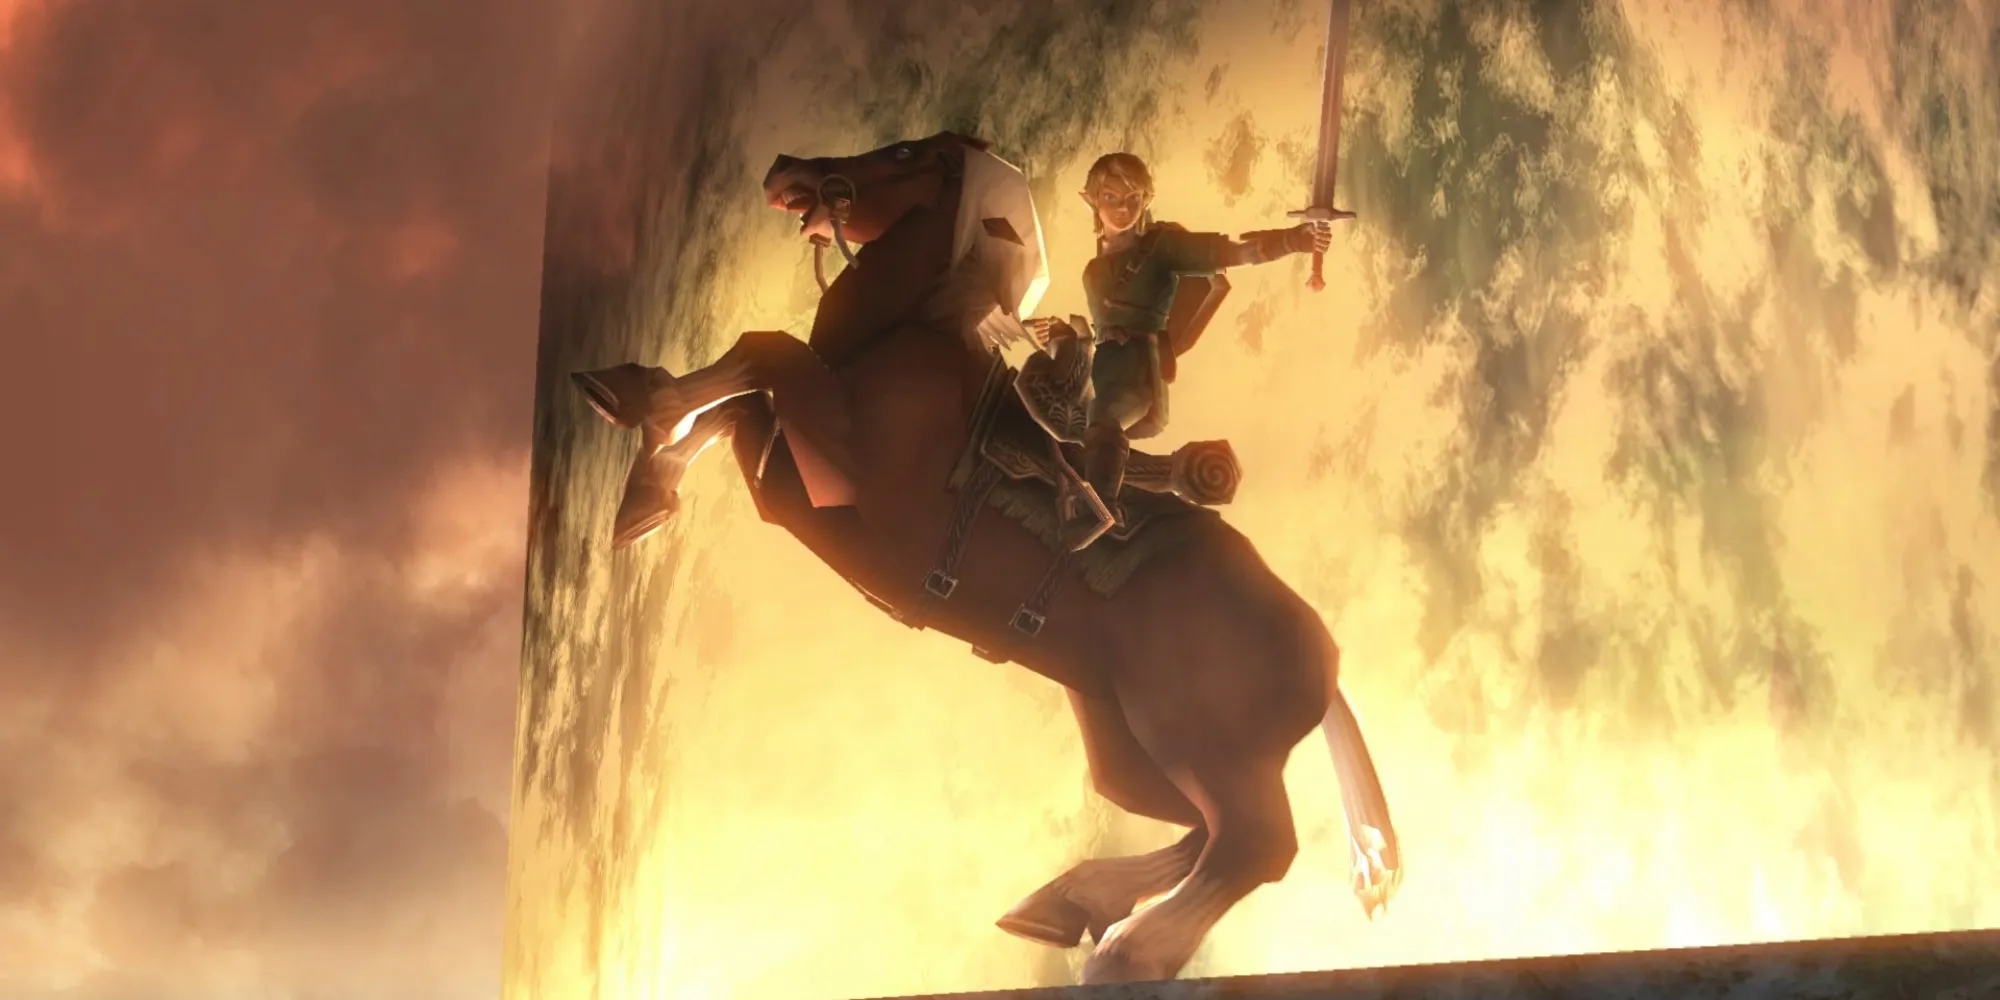 Link riding Epona in Twilight Princess